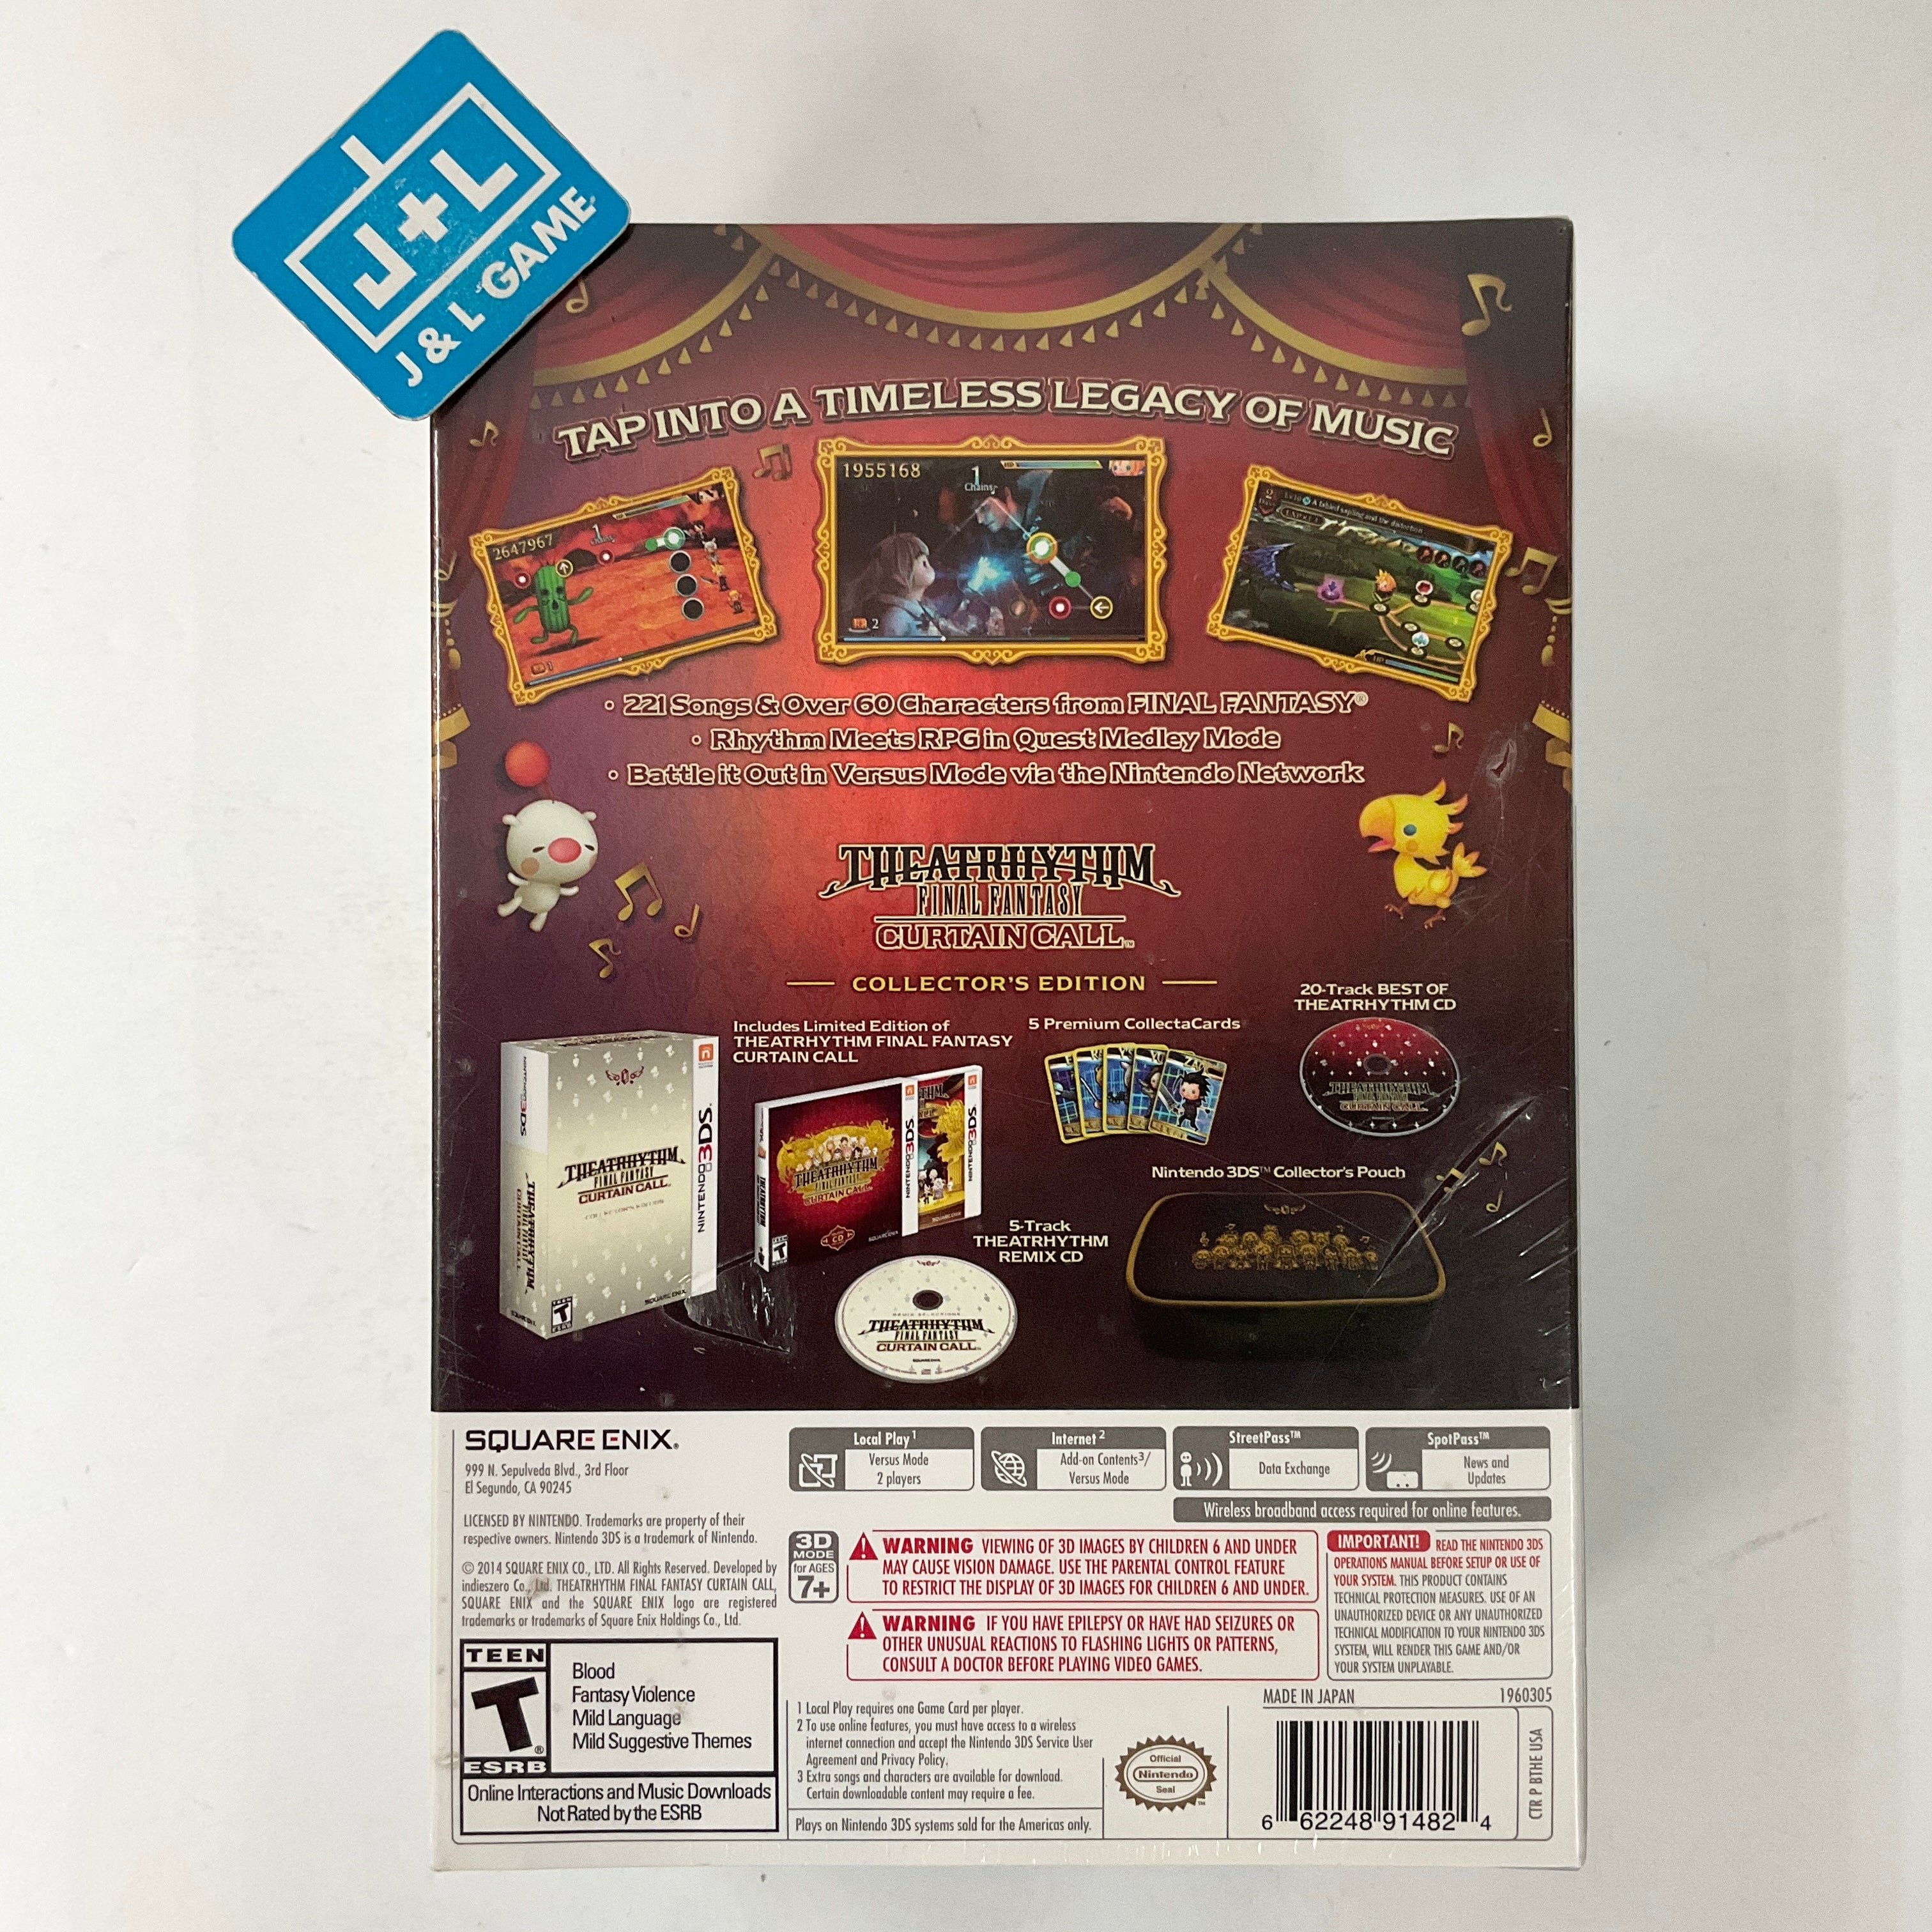 Theatrhythm Final Fantasy Curtain Call Collector's Edition - Nintendo 3DS Video Games Square Enix   